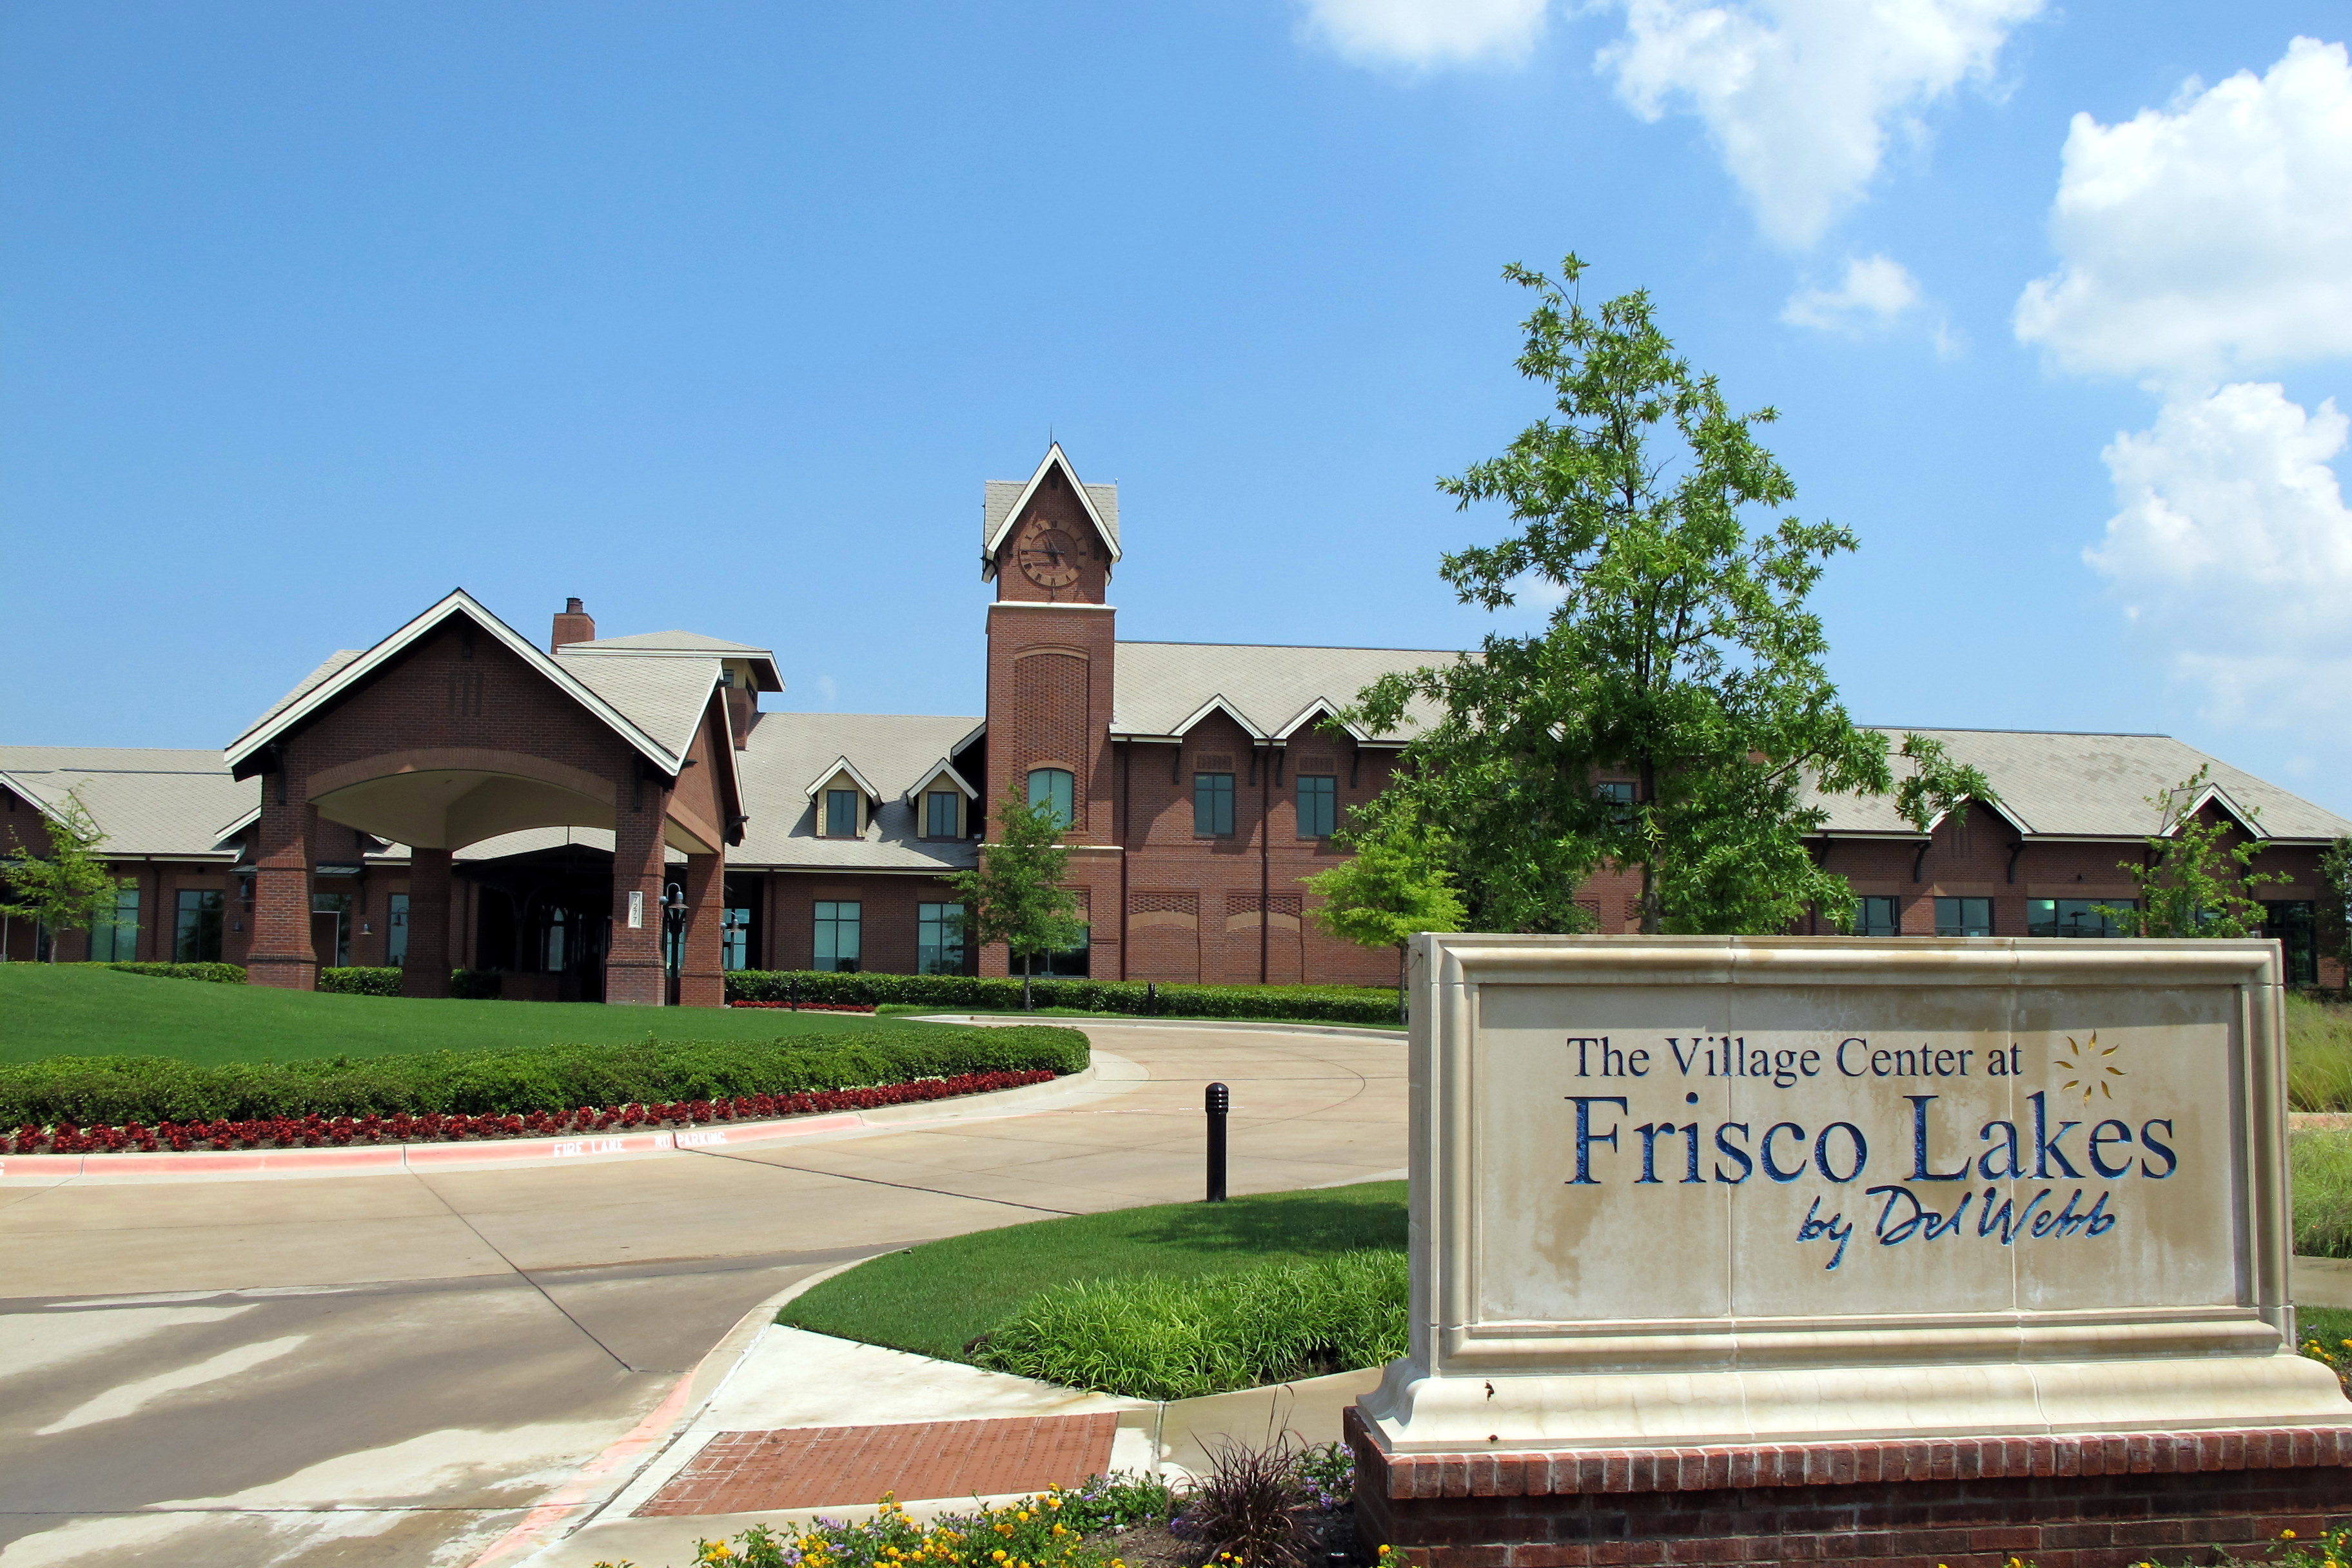 Frisco Lakes Amenity Center